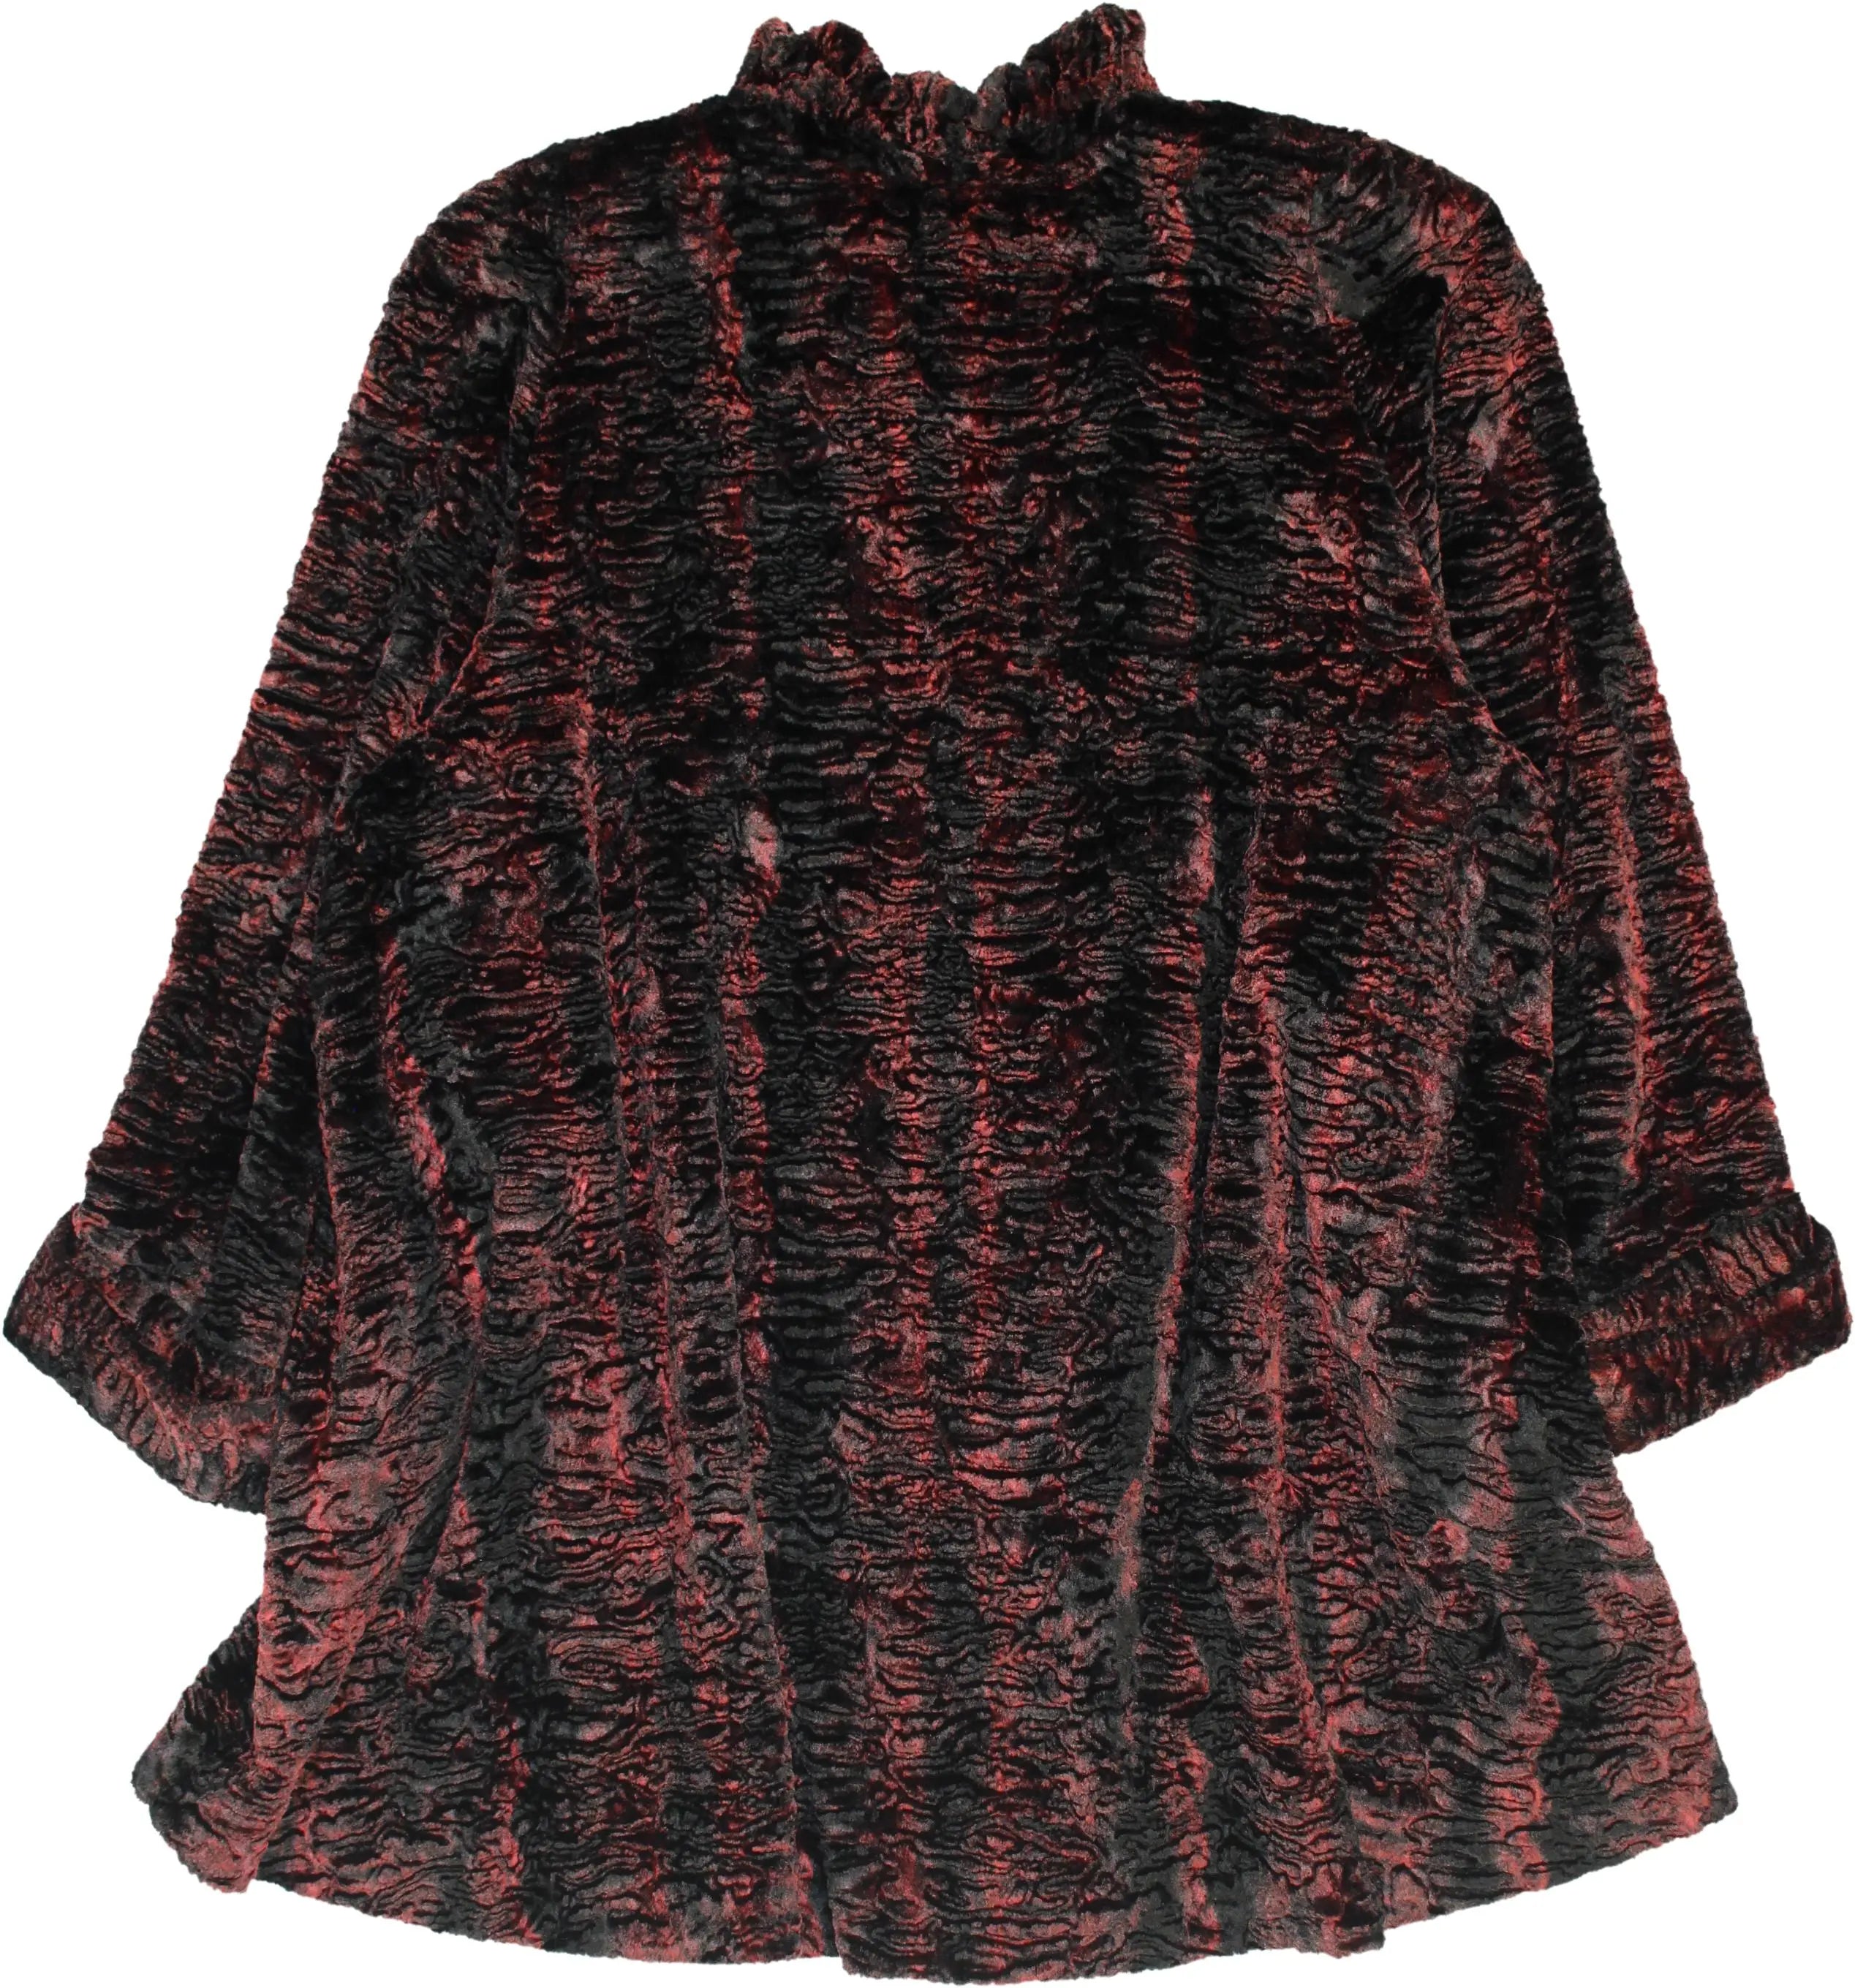 Modele Depose - Faux Fur Coat- ThriftTale.com - Vintage and second handclothing